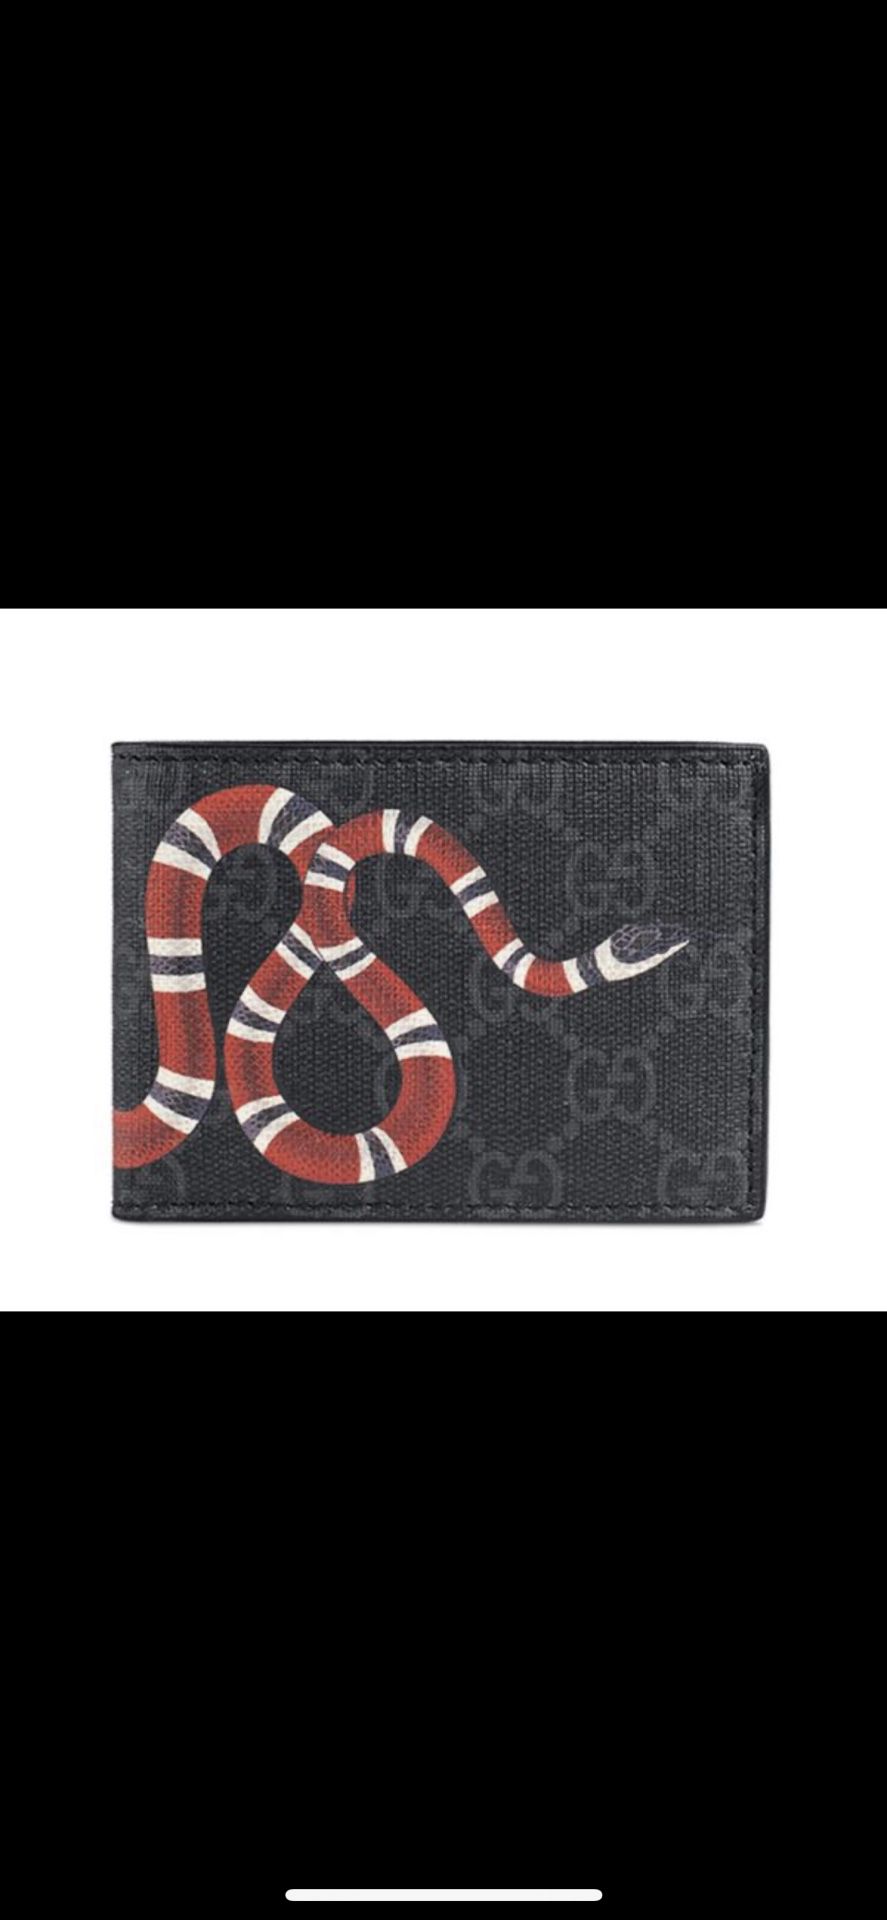 Gucci’s wallet